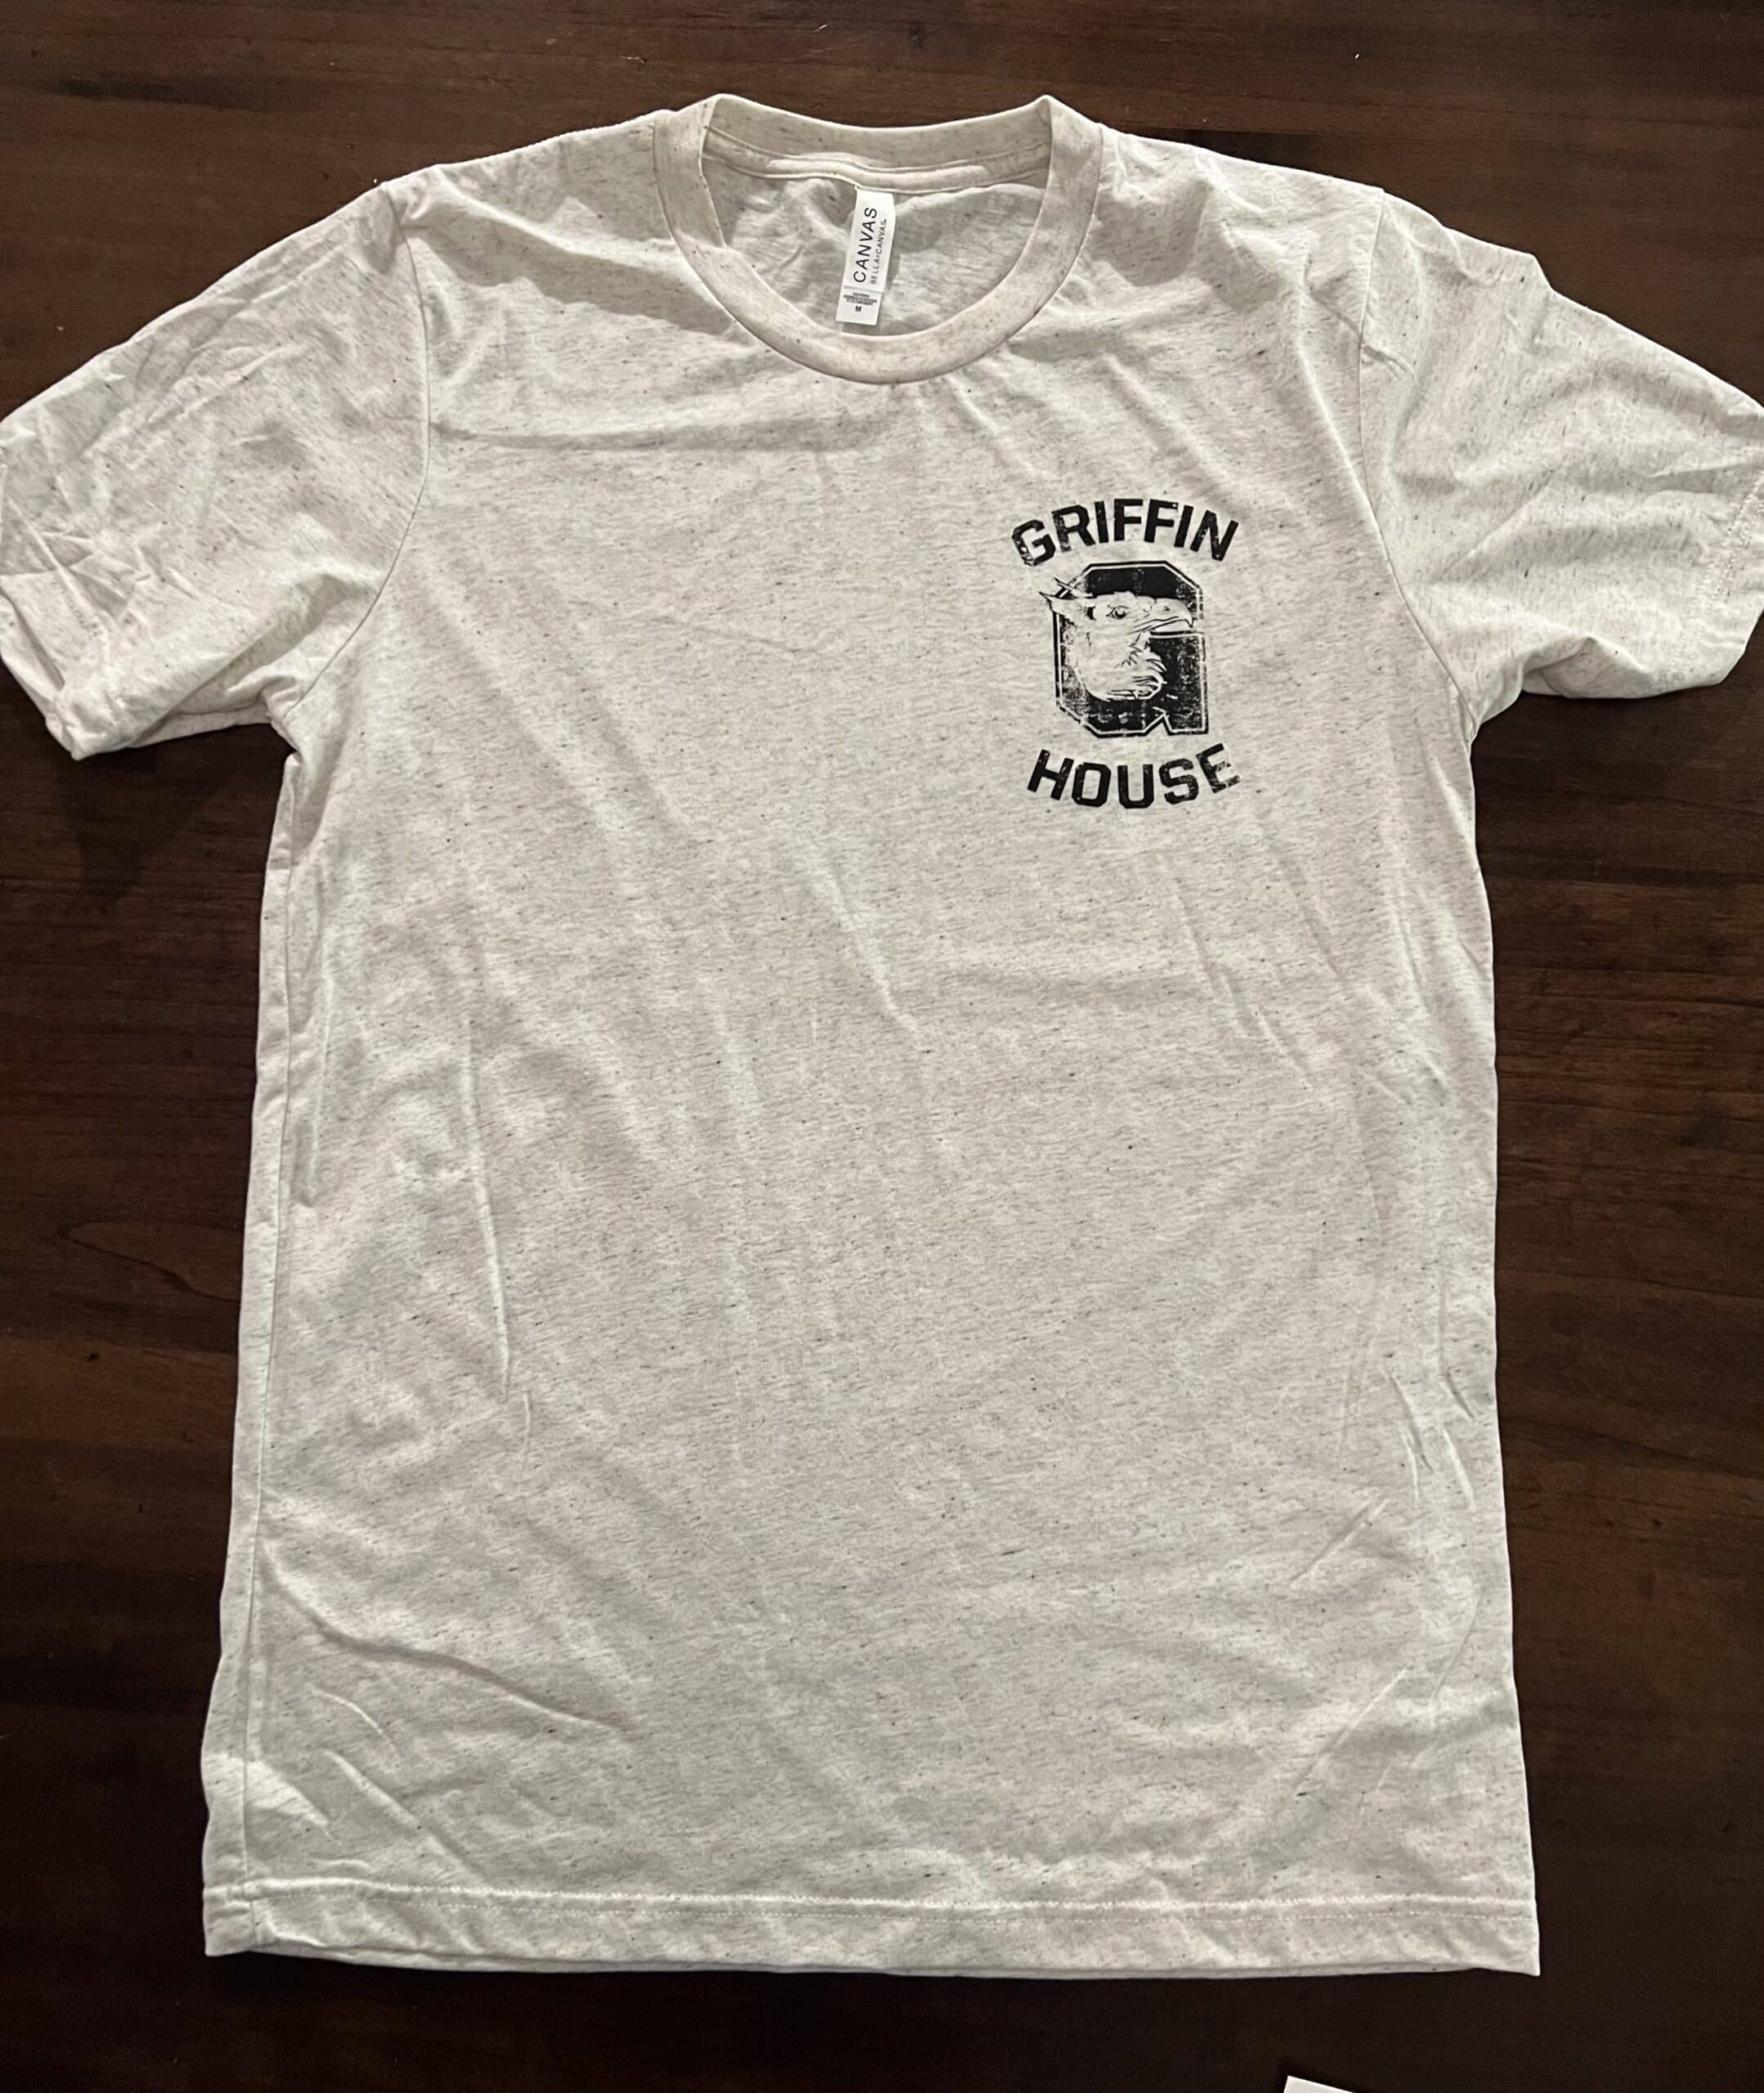 Unisex Off-White/Black T-Shirt - Griffin House